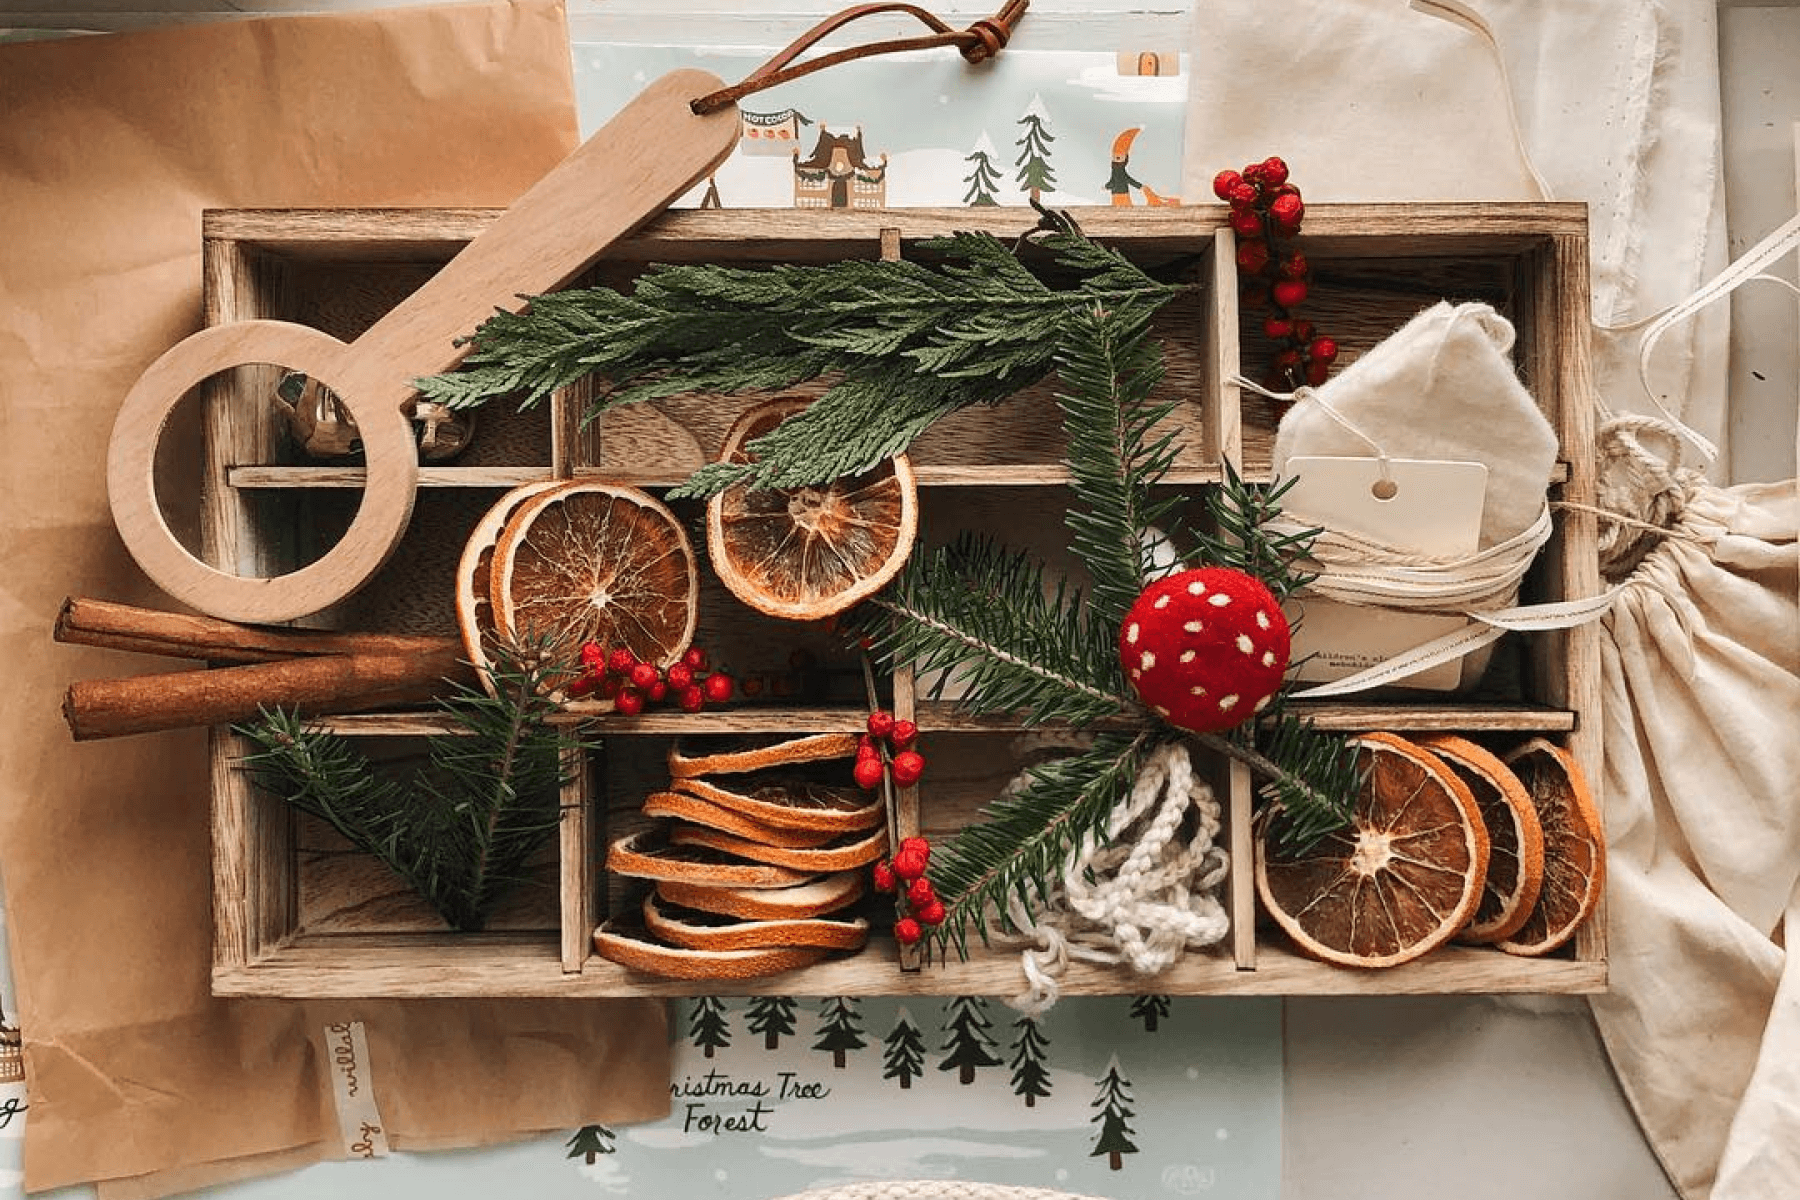 Tutorial: DIY Rustic Holiday Gift/Goody Bags